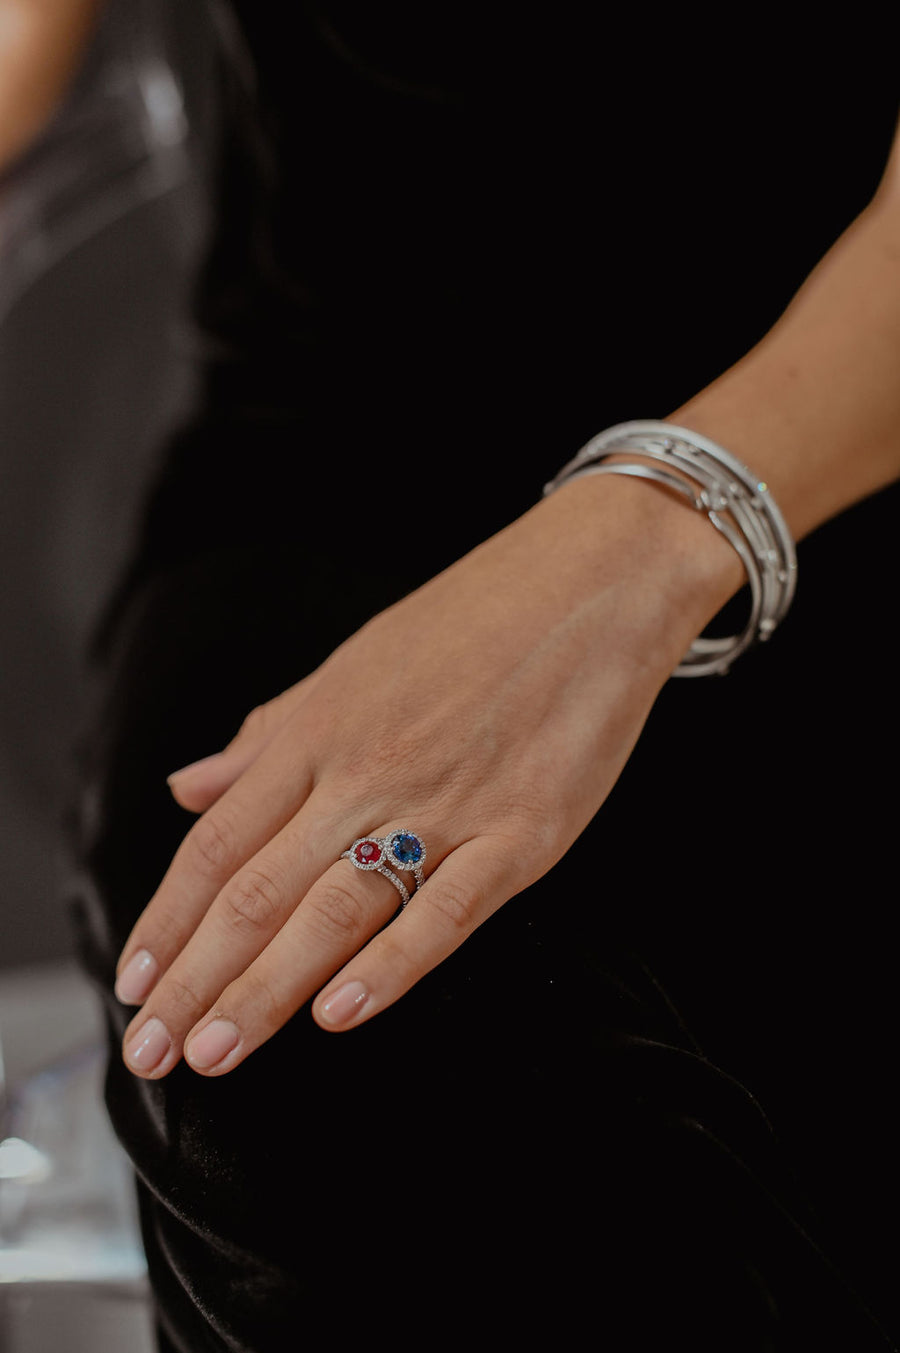 Platinum Sapphire Diamond Halo Engagement Ring